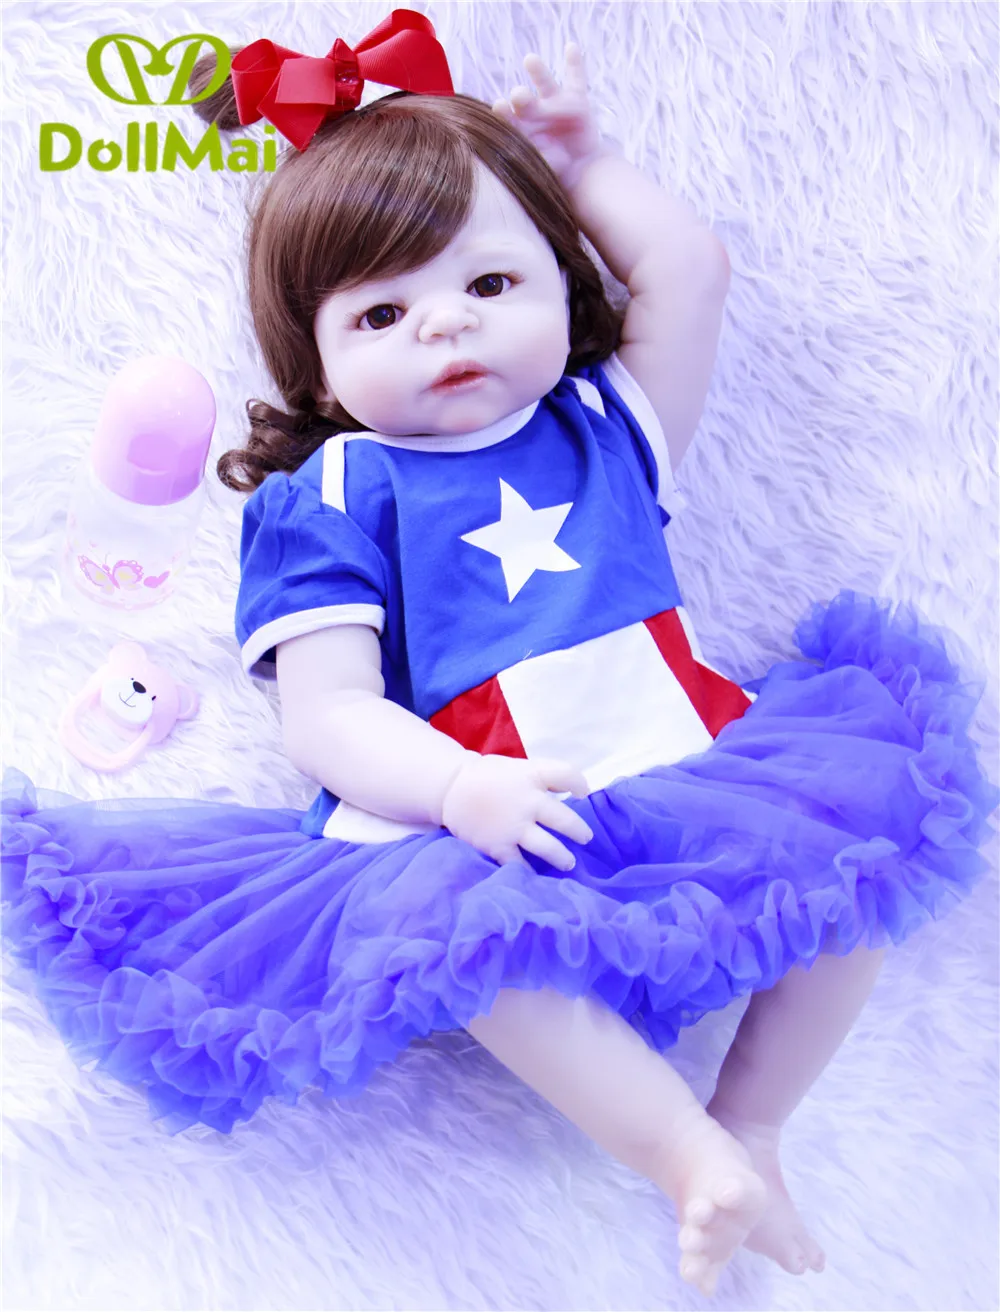 

DollMai dolls toys for children gift 23"57cm full body silicone reborn baby doll newborn babies girl alive bebe boneca reborn